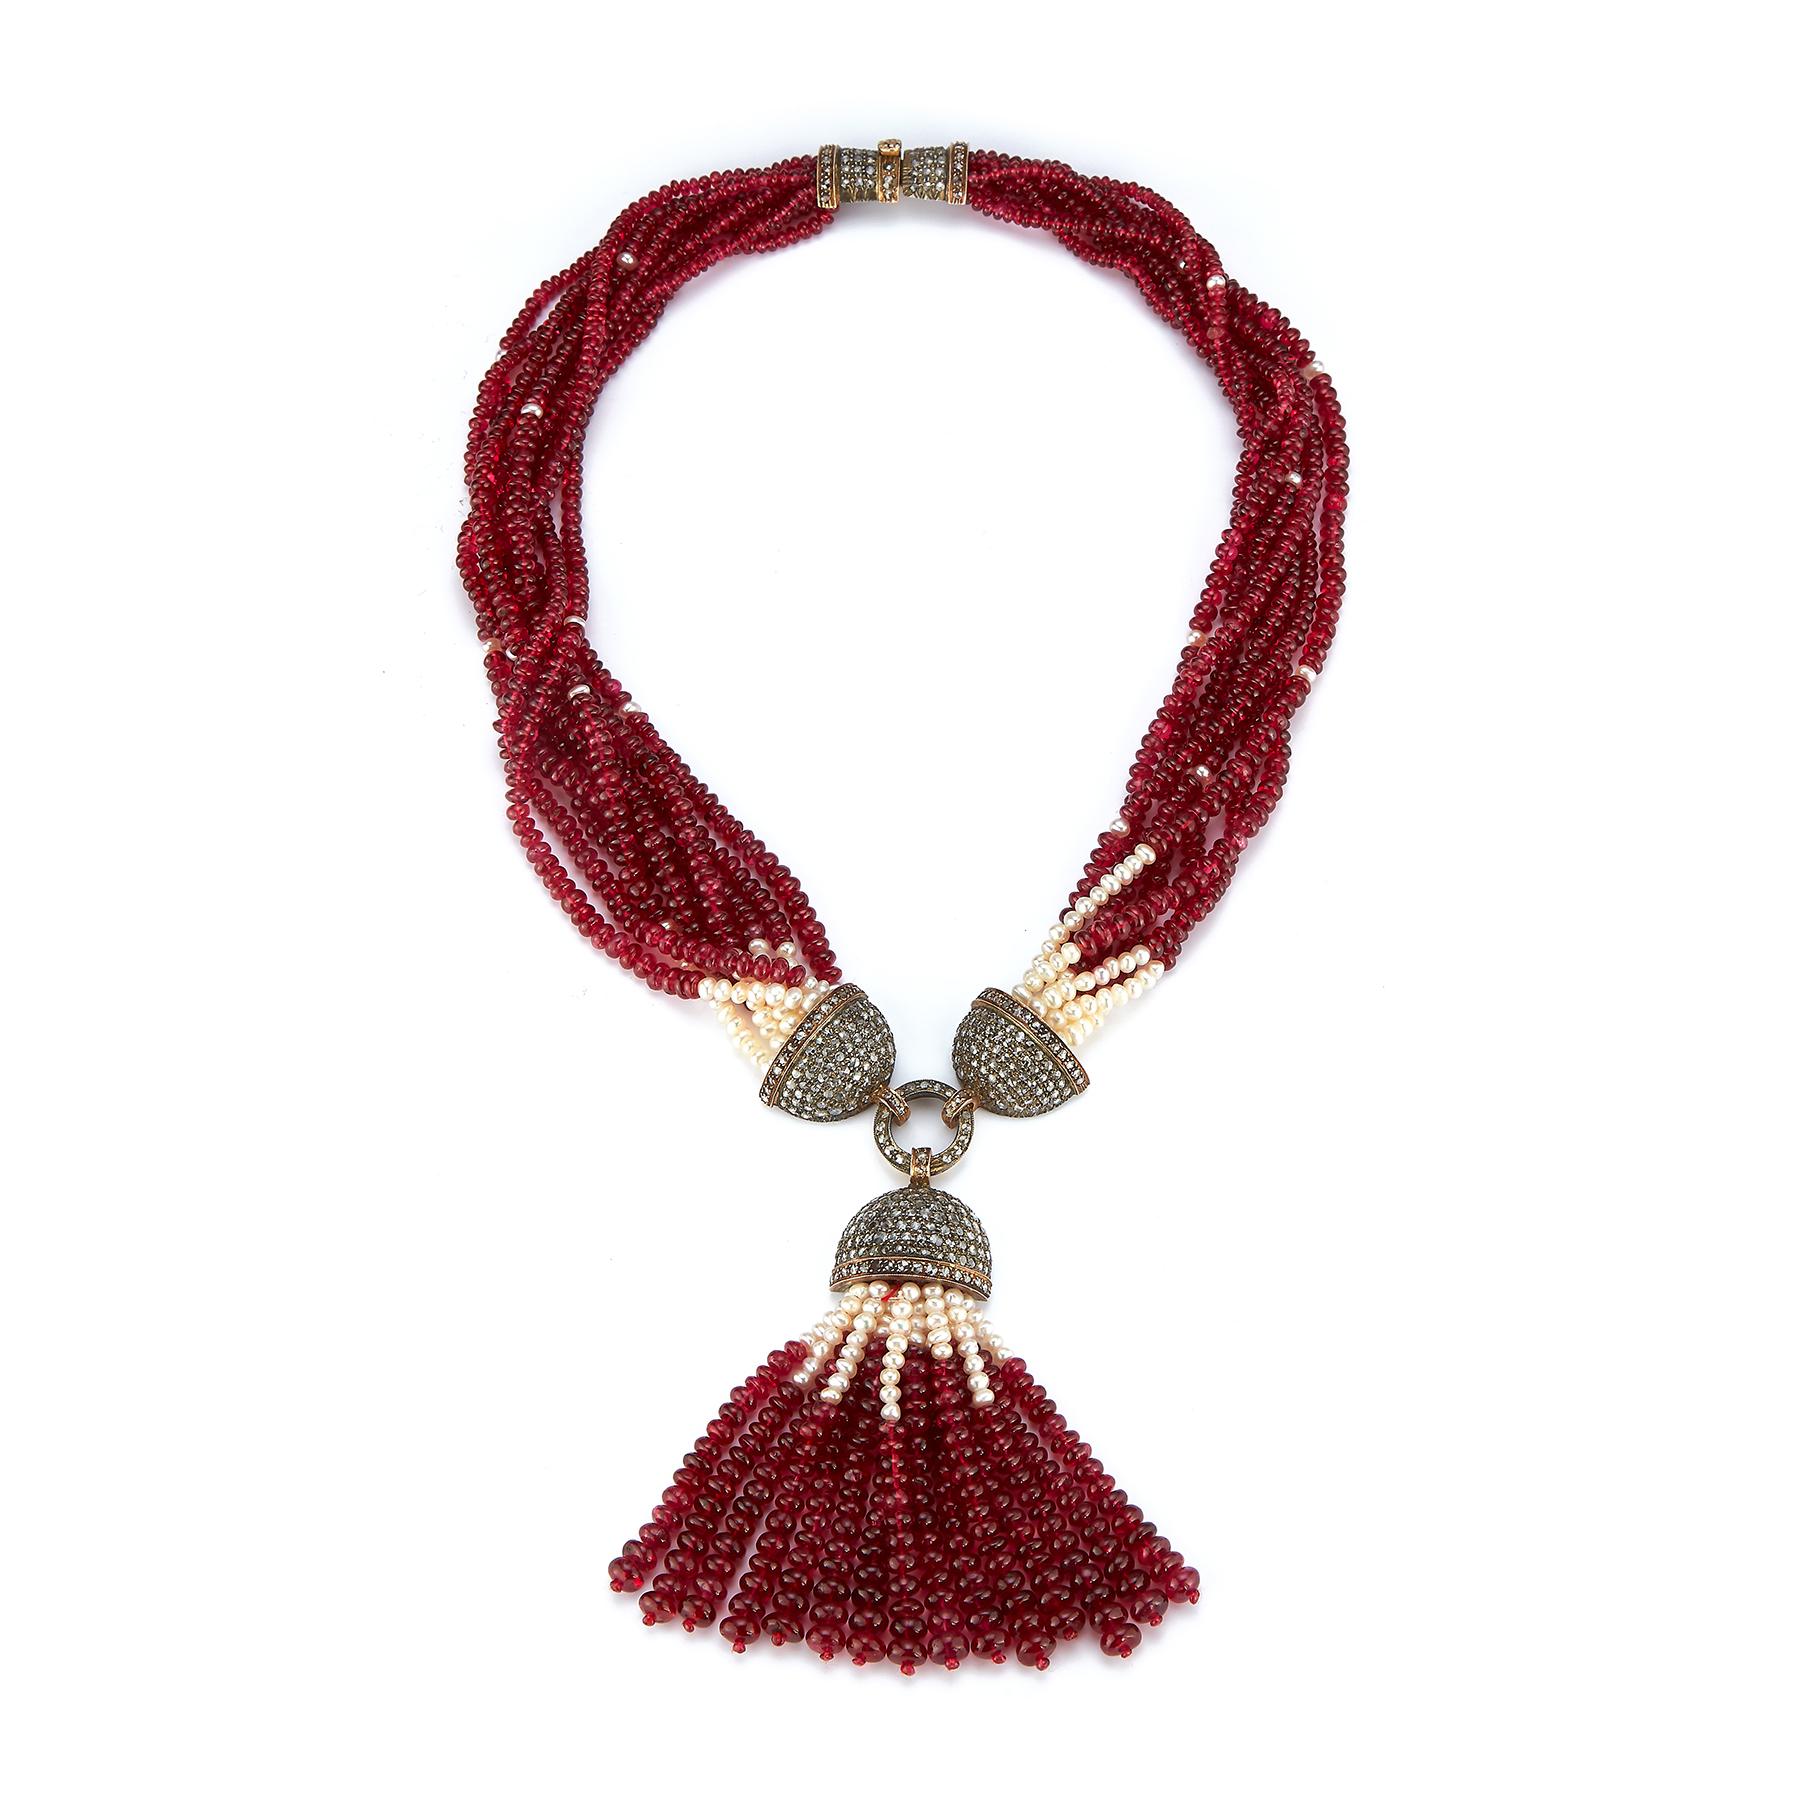 Spinel, Pearl & Diamond Multi Strand Tassel Necklace
Necklace Length: 16